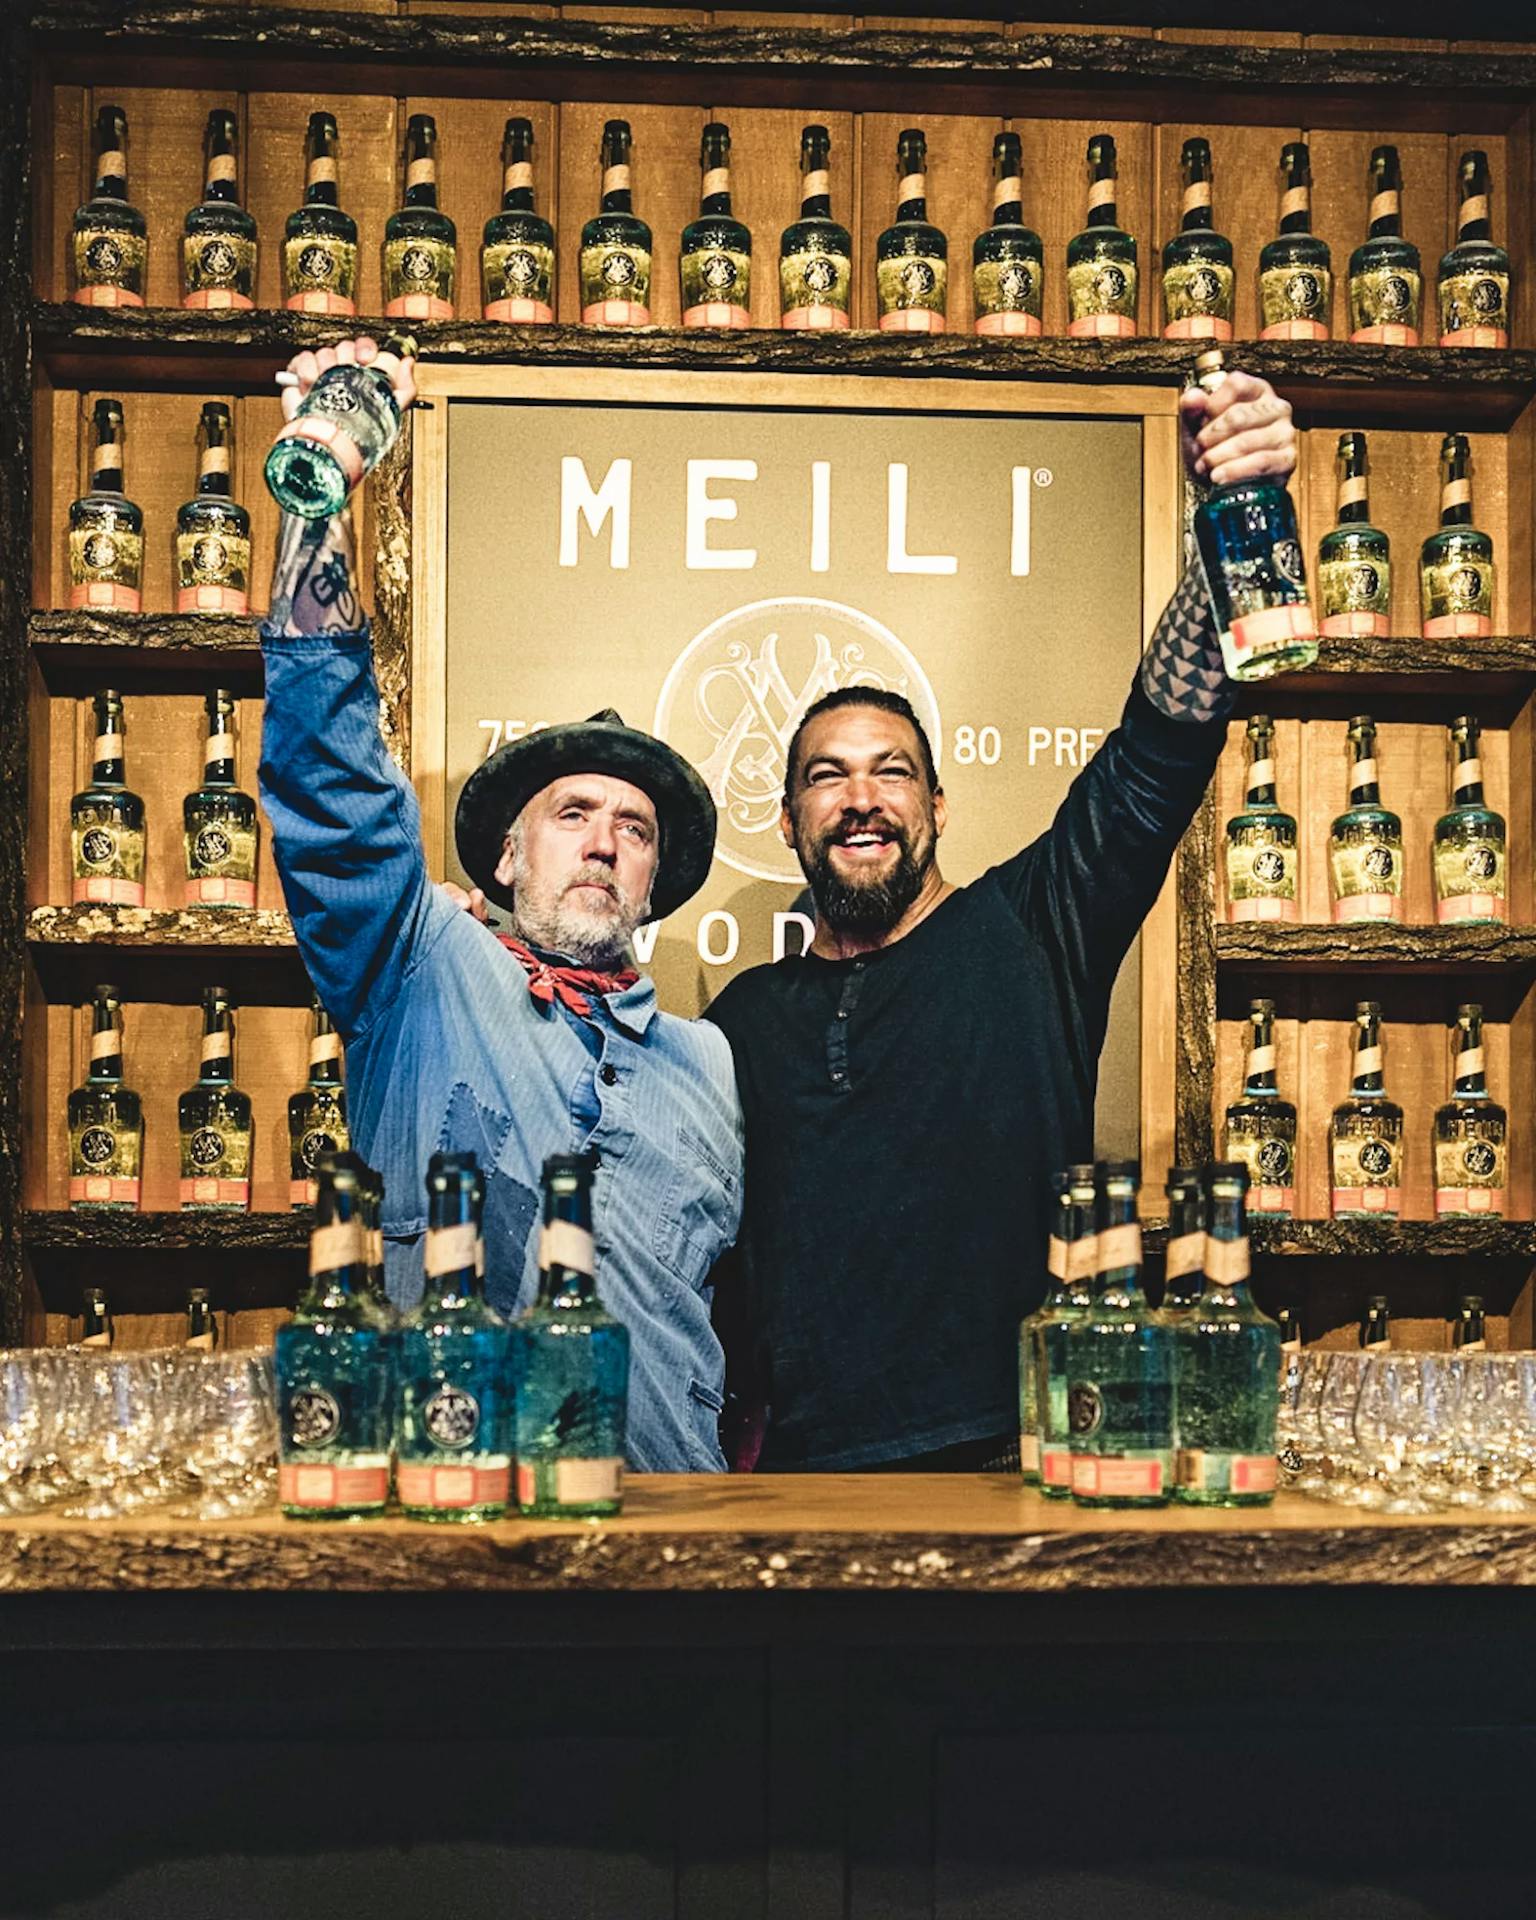 jason momoa and blaine halvorson holding vodka bottles with Meili in background